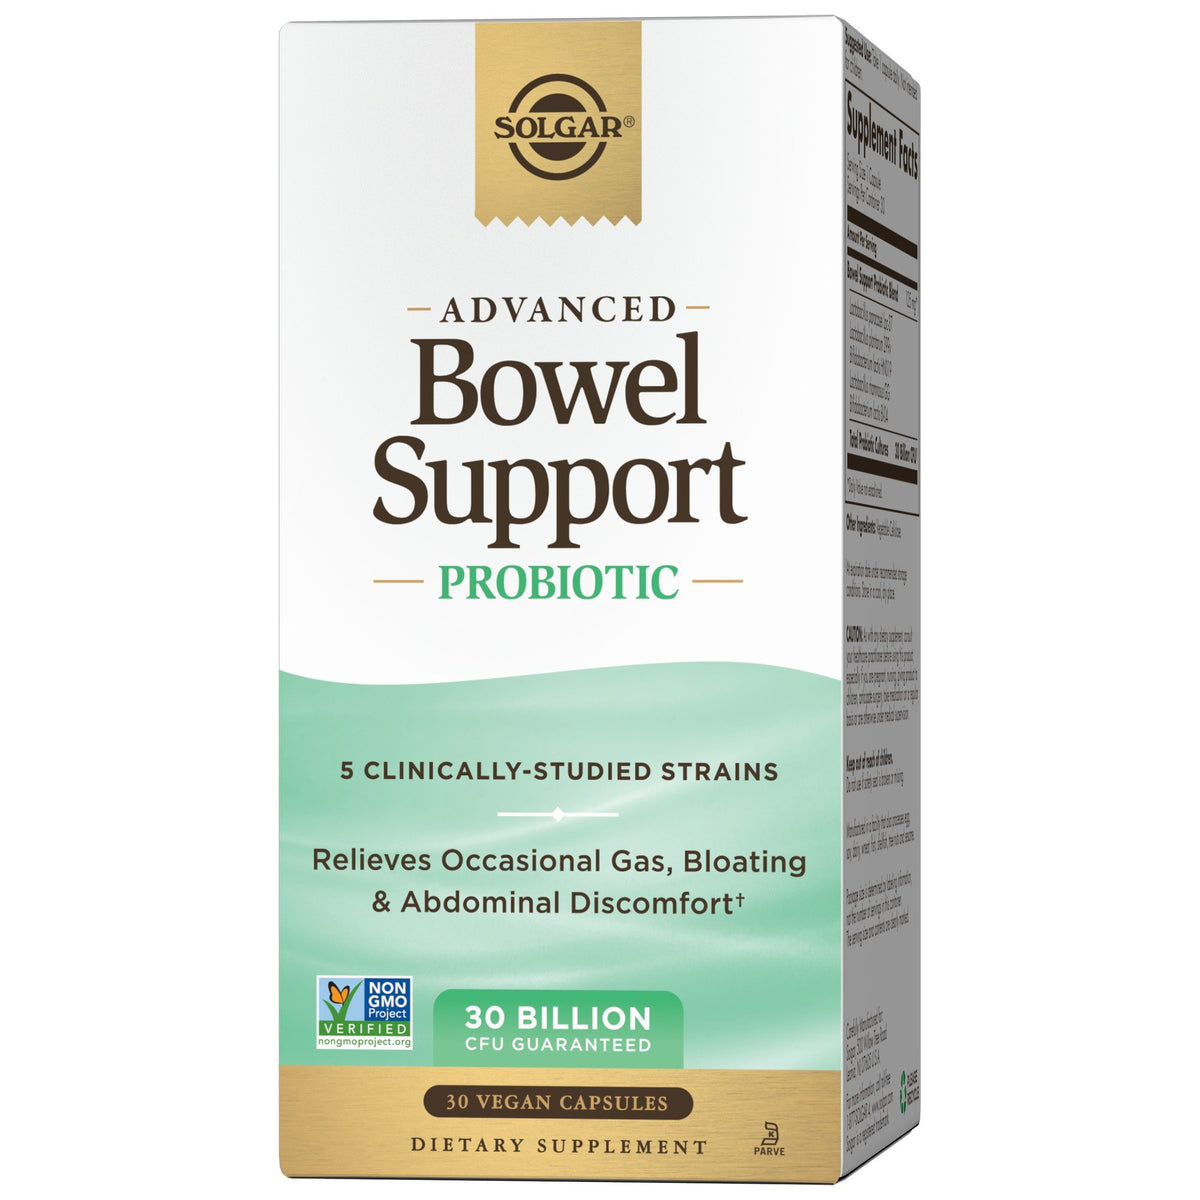 Solgar Advanced Bowel Support Probiotic 30B 30 Capsule